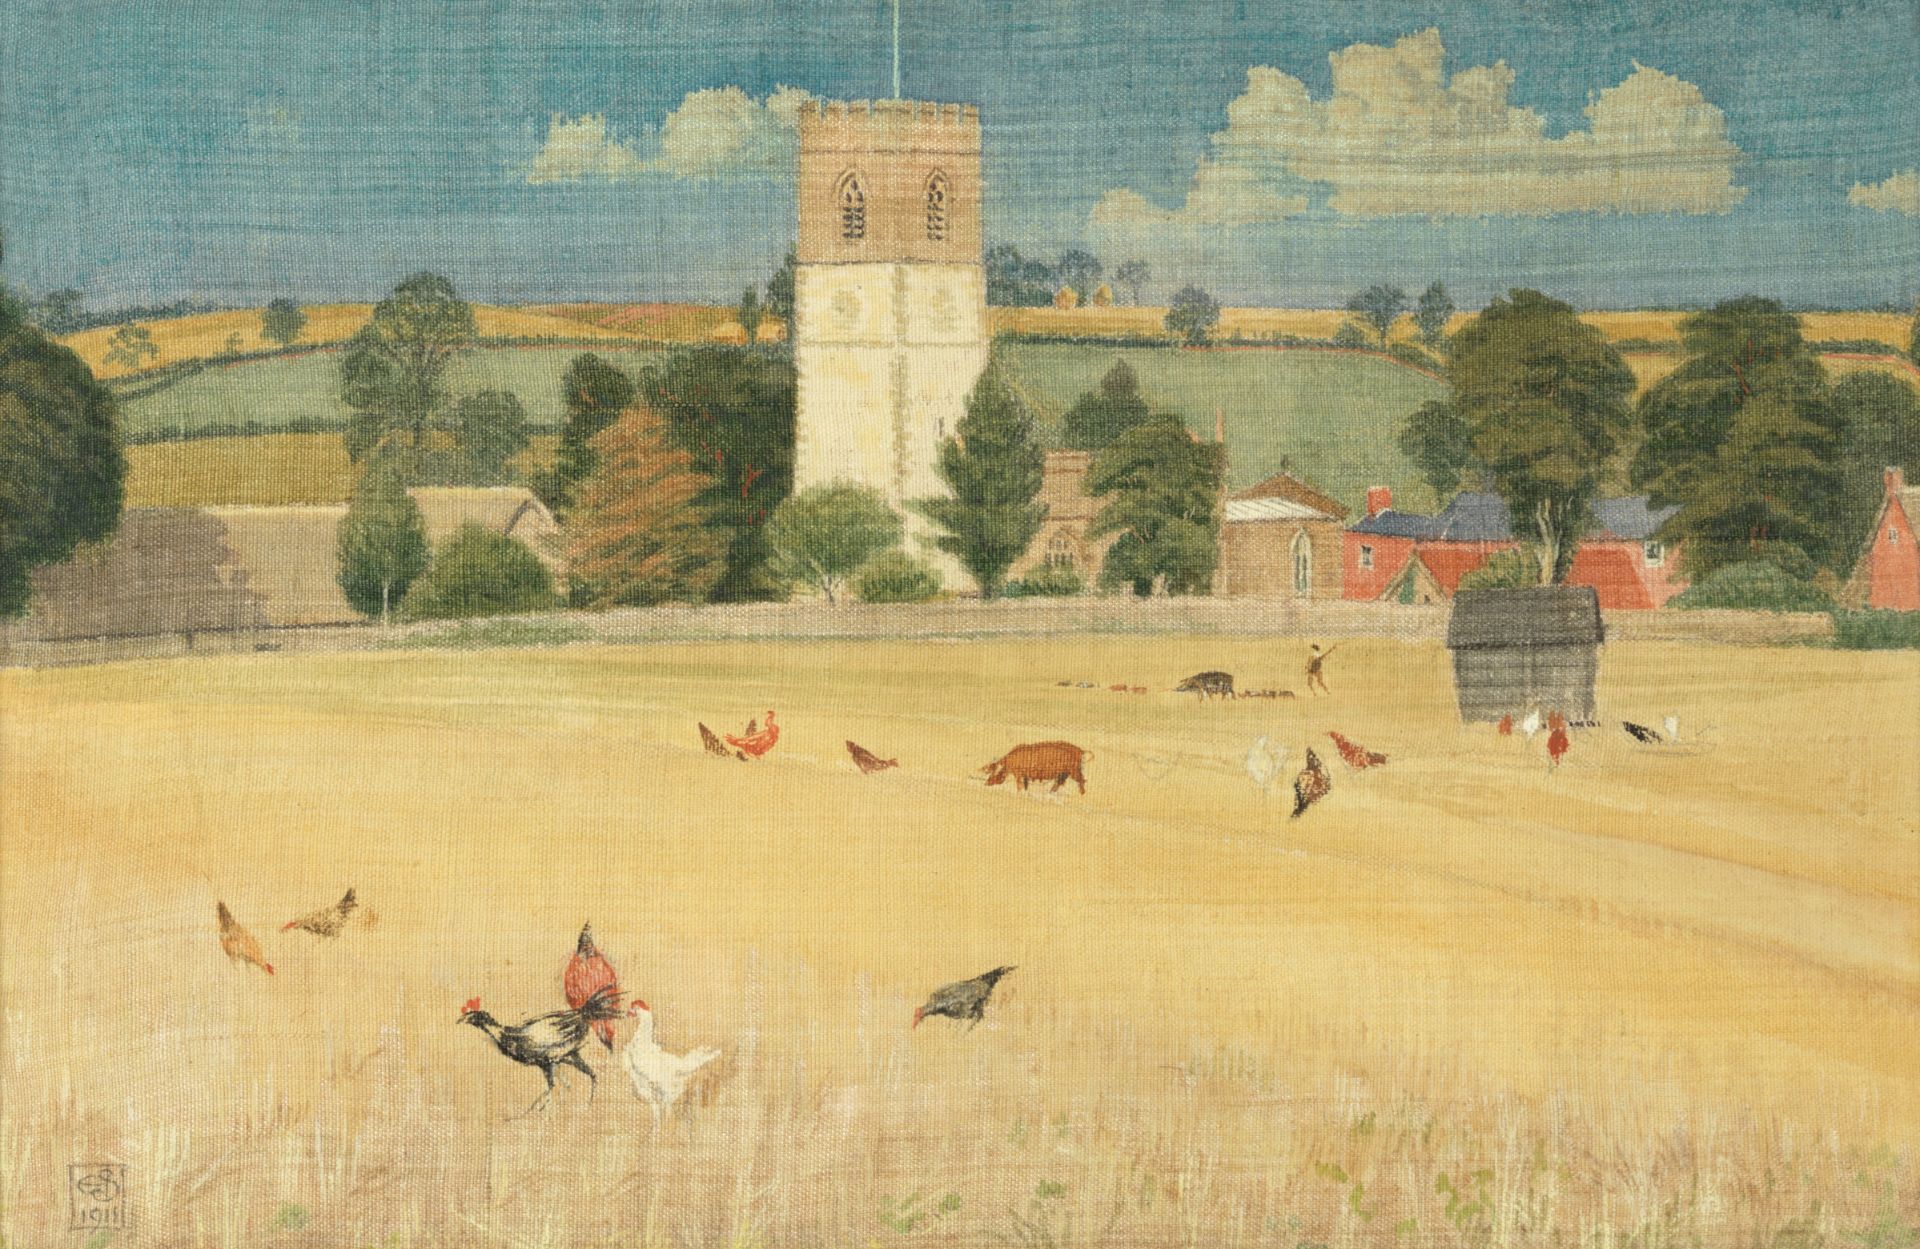 Joseph Edward Southall, RWS, NEAC, RBSA (British, 1861-1944) Rural village scene